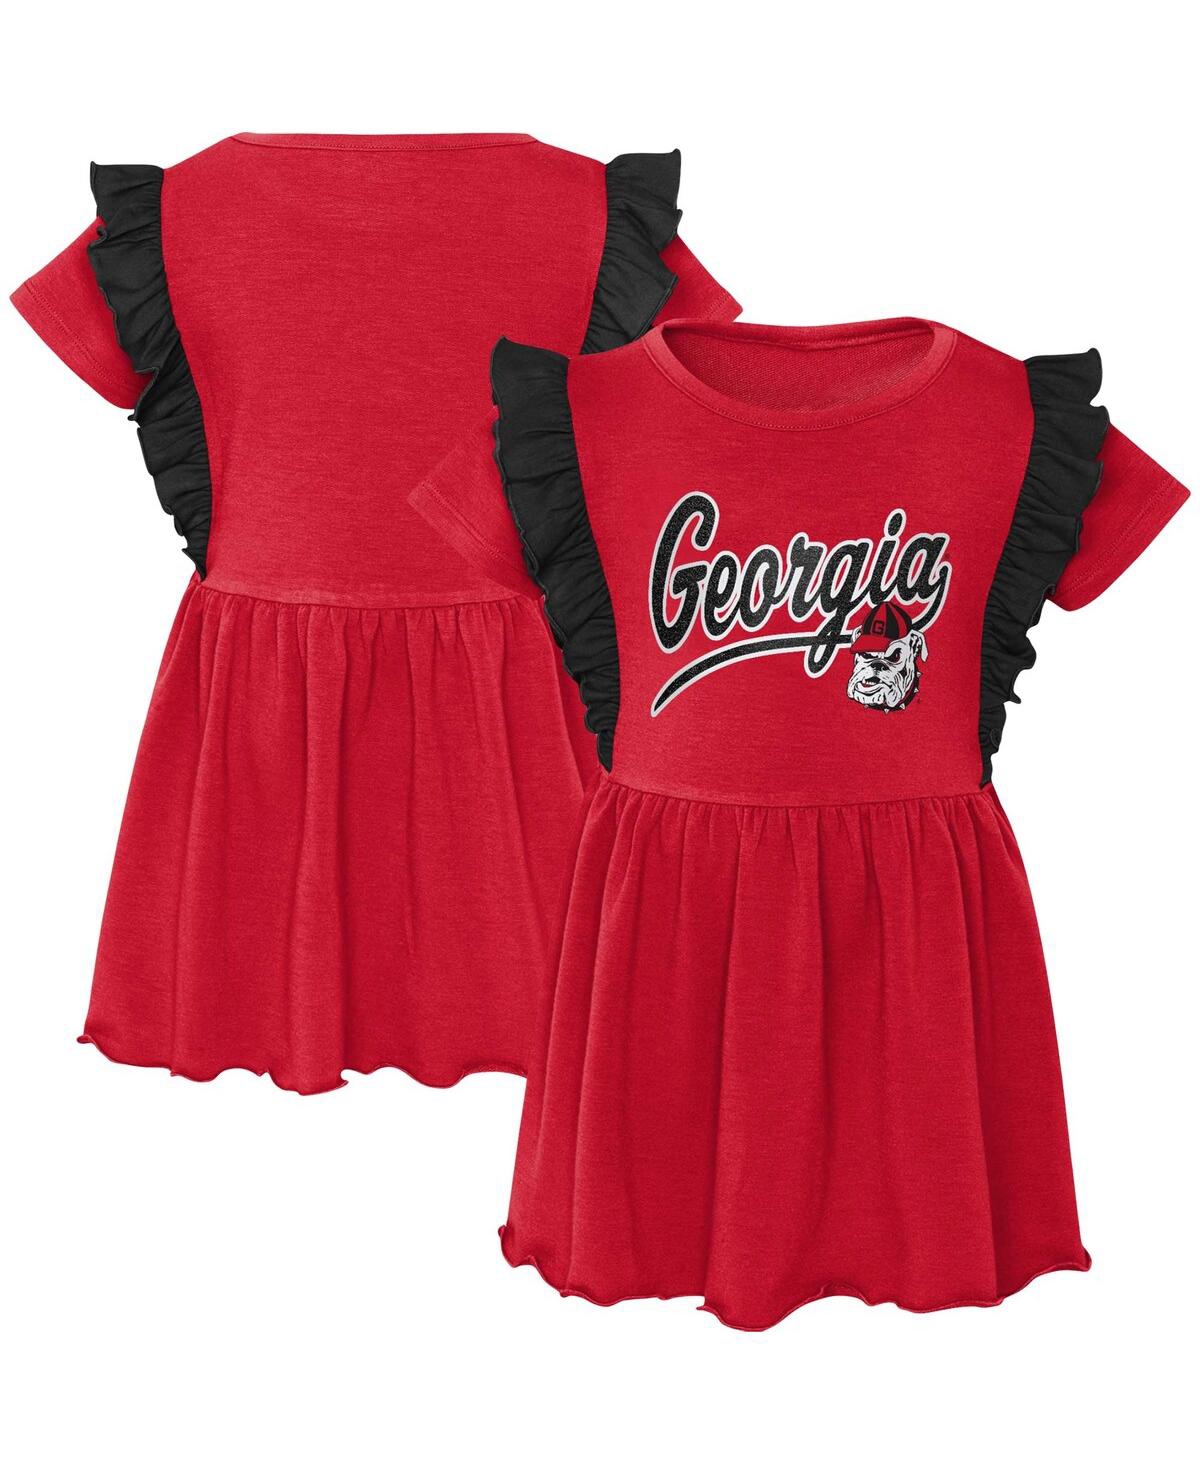 Outerstuff Babies' Girls Toddler Red Georgia Bulldogs Too Cute Tri-blend Dress